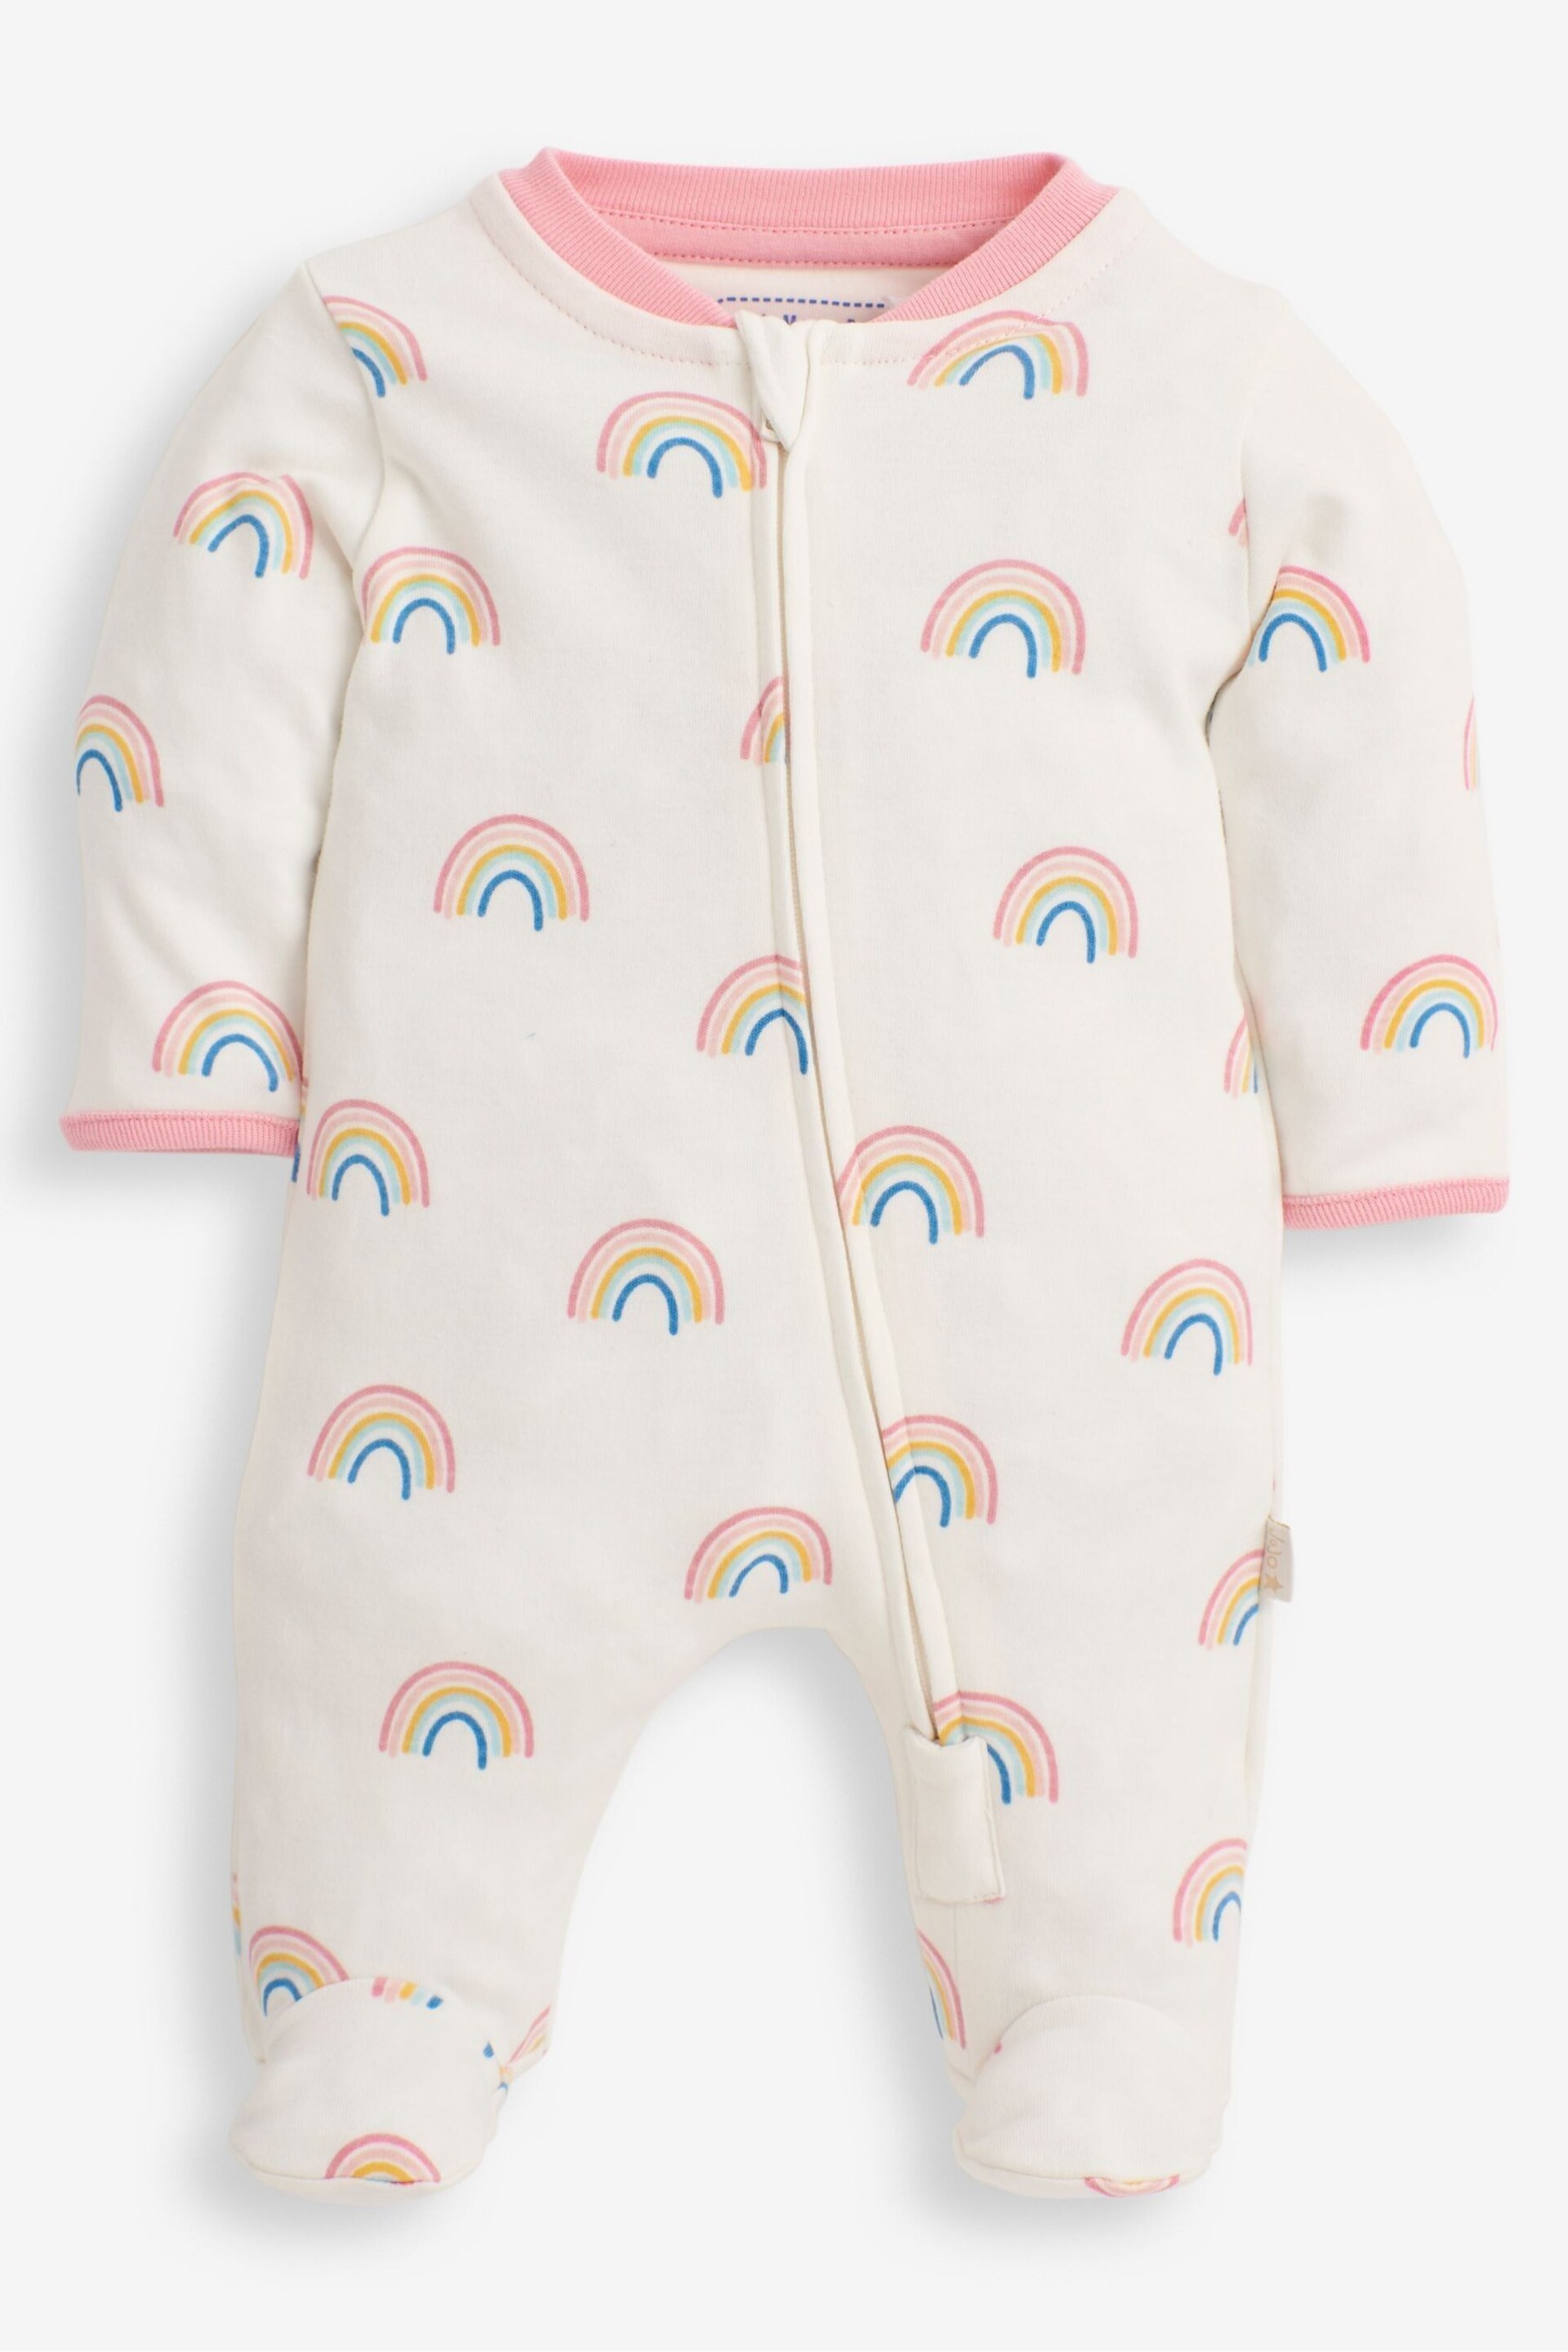 JoJo Maman Bébé Cream Rainbow Print Zip Baby Sleepsuit - Image 4 of 6